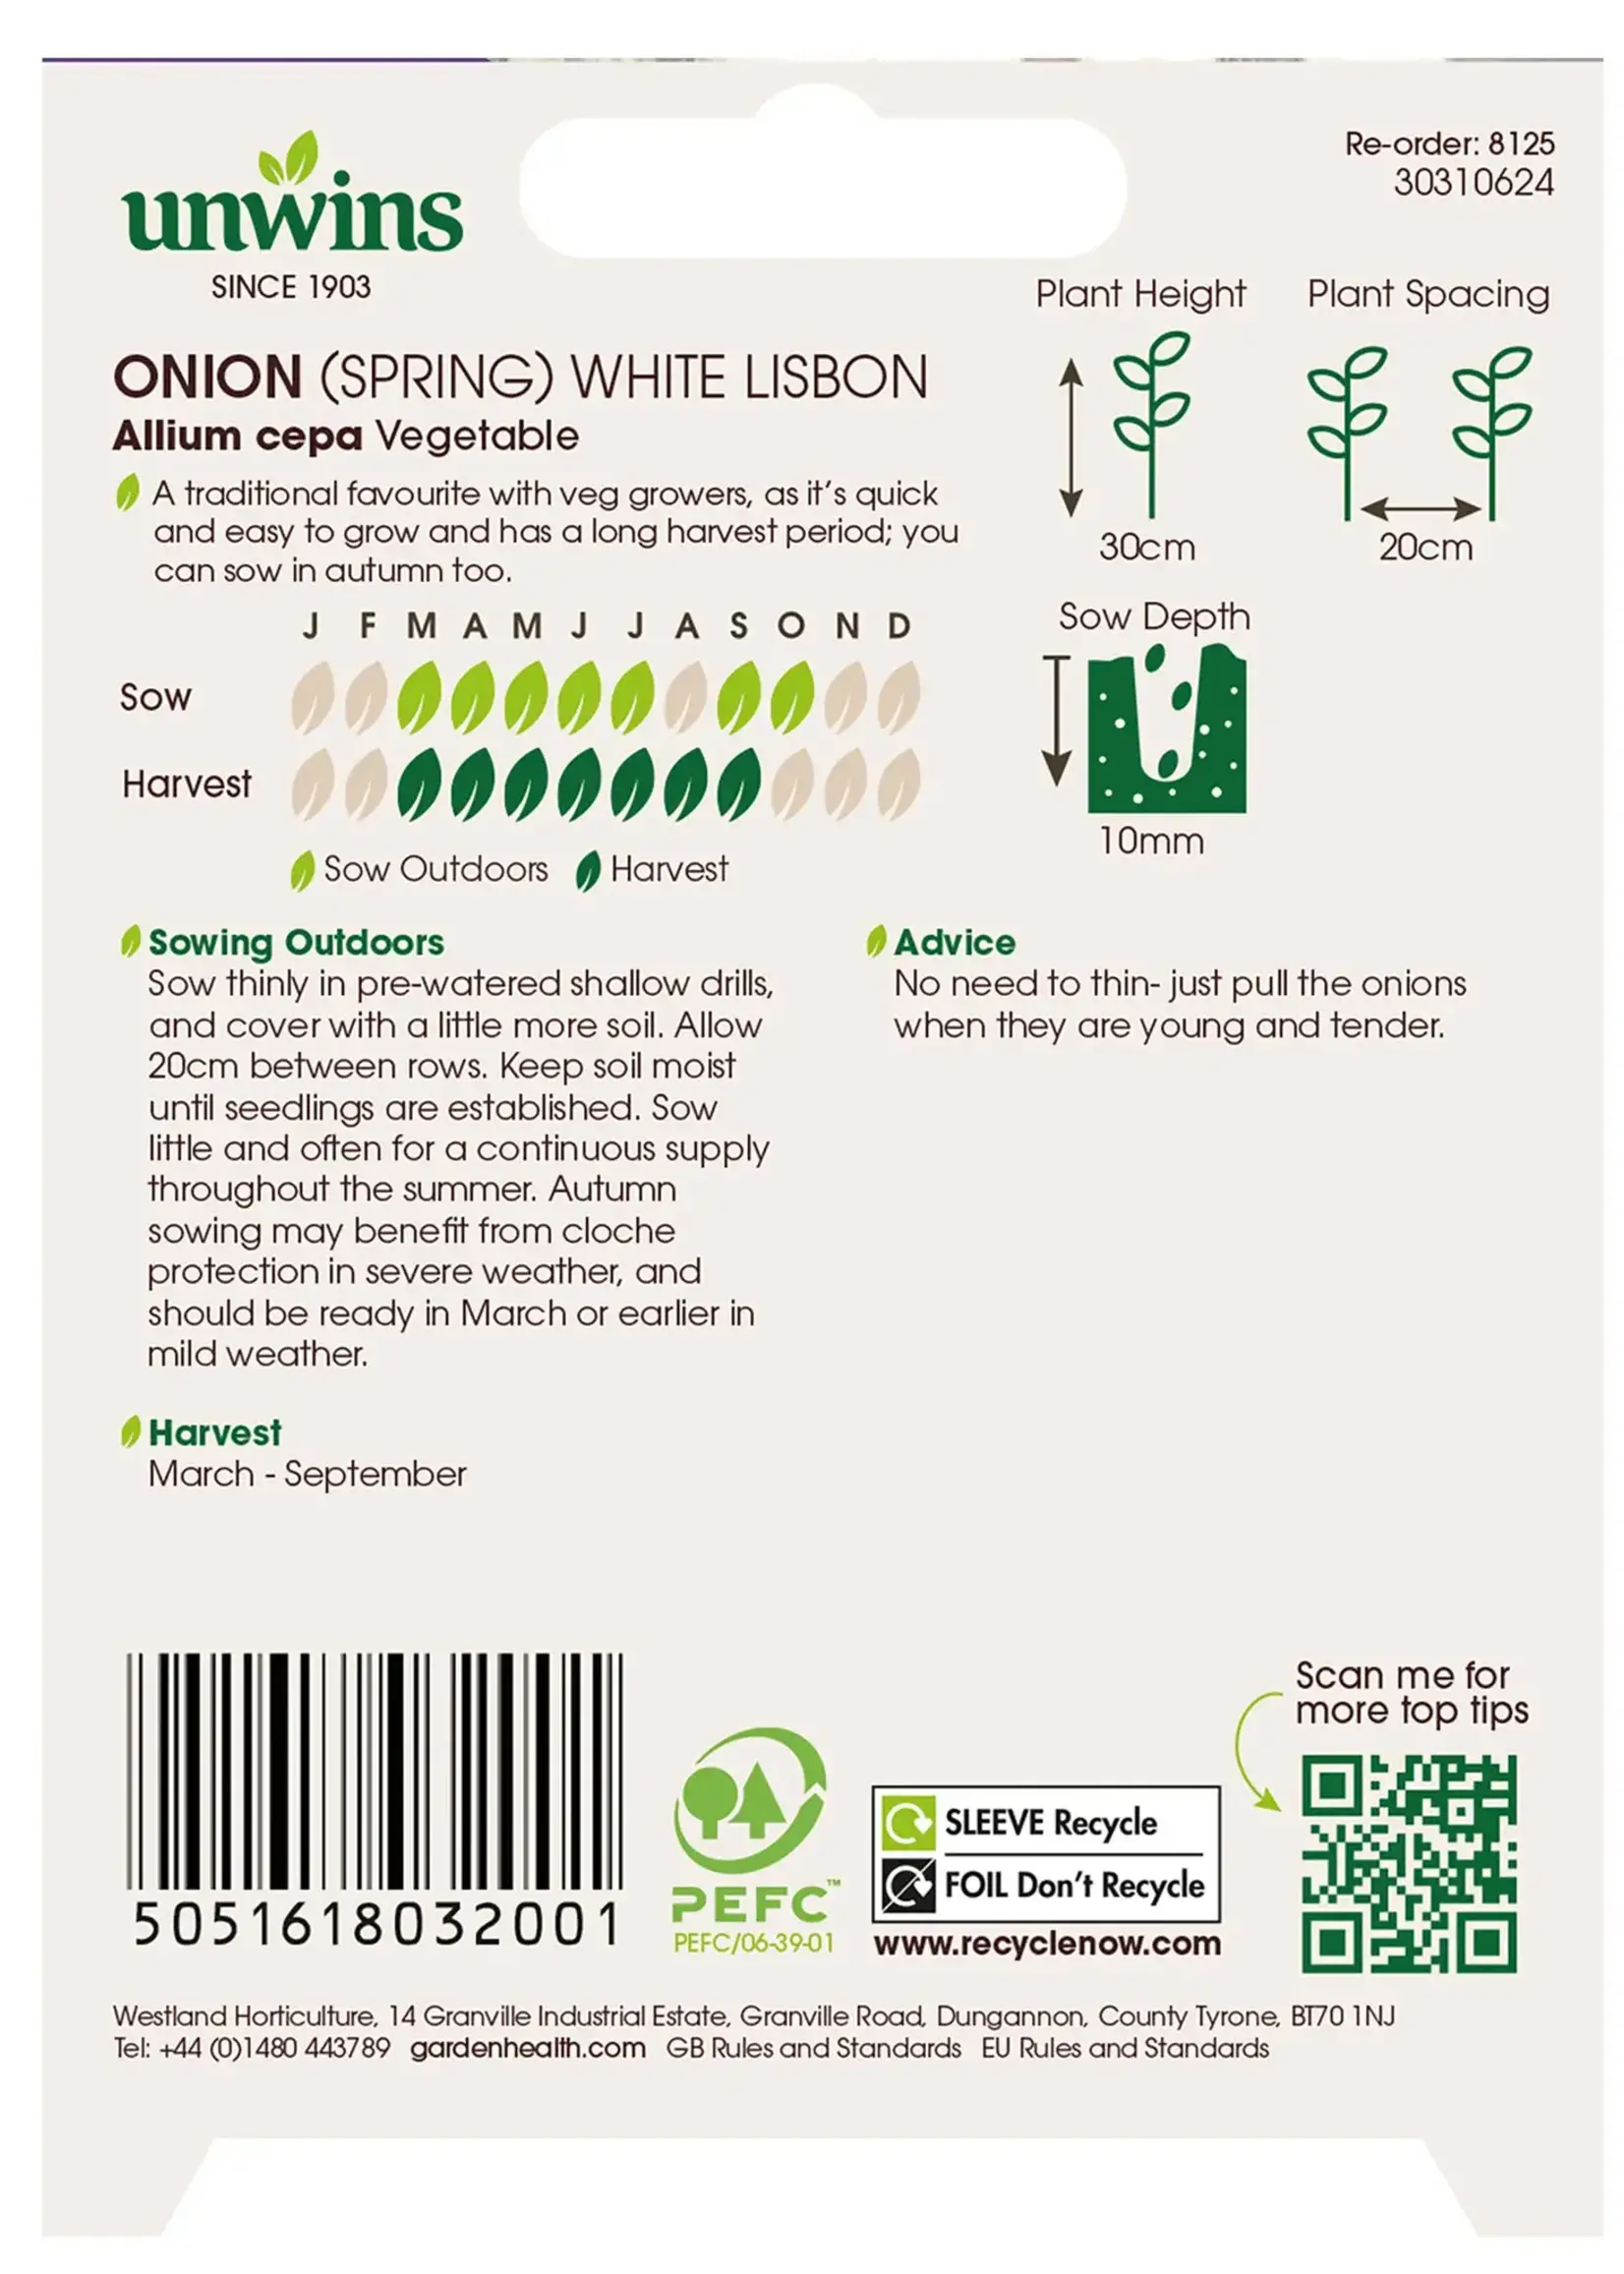 Unwins Onion (Spring) - White Lisbon